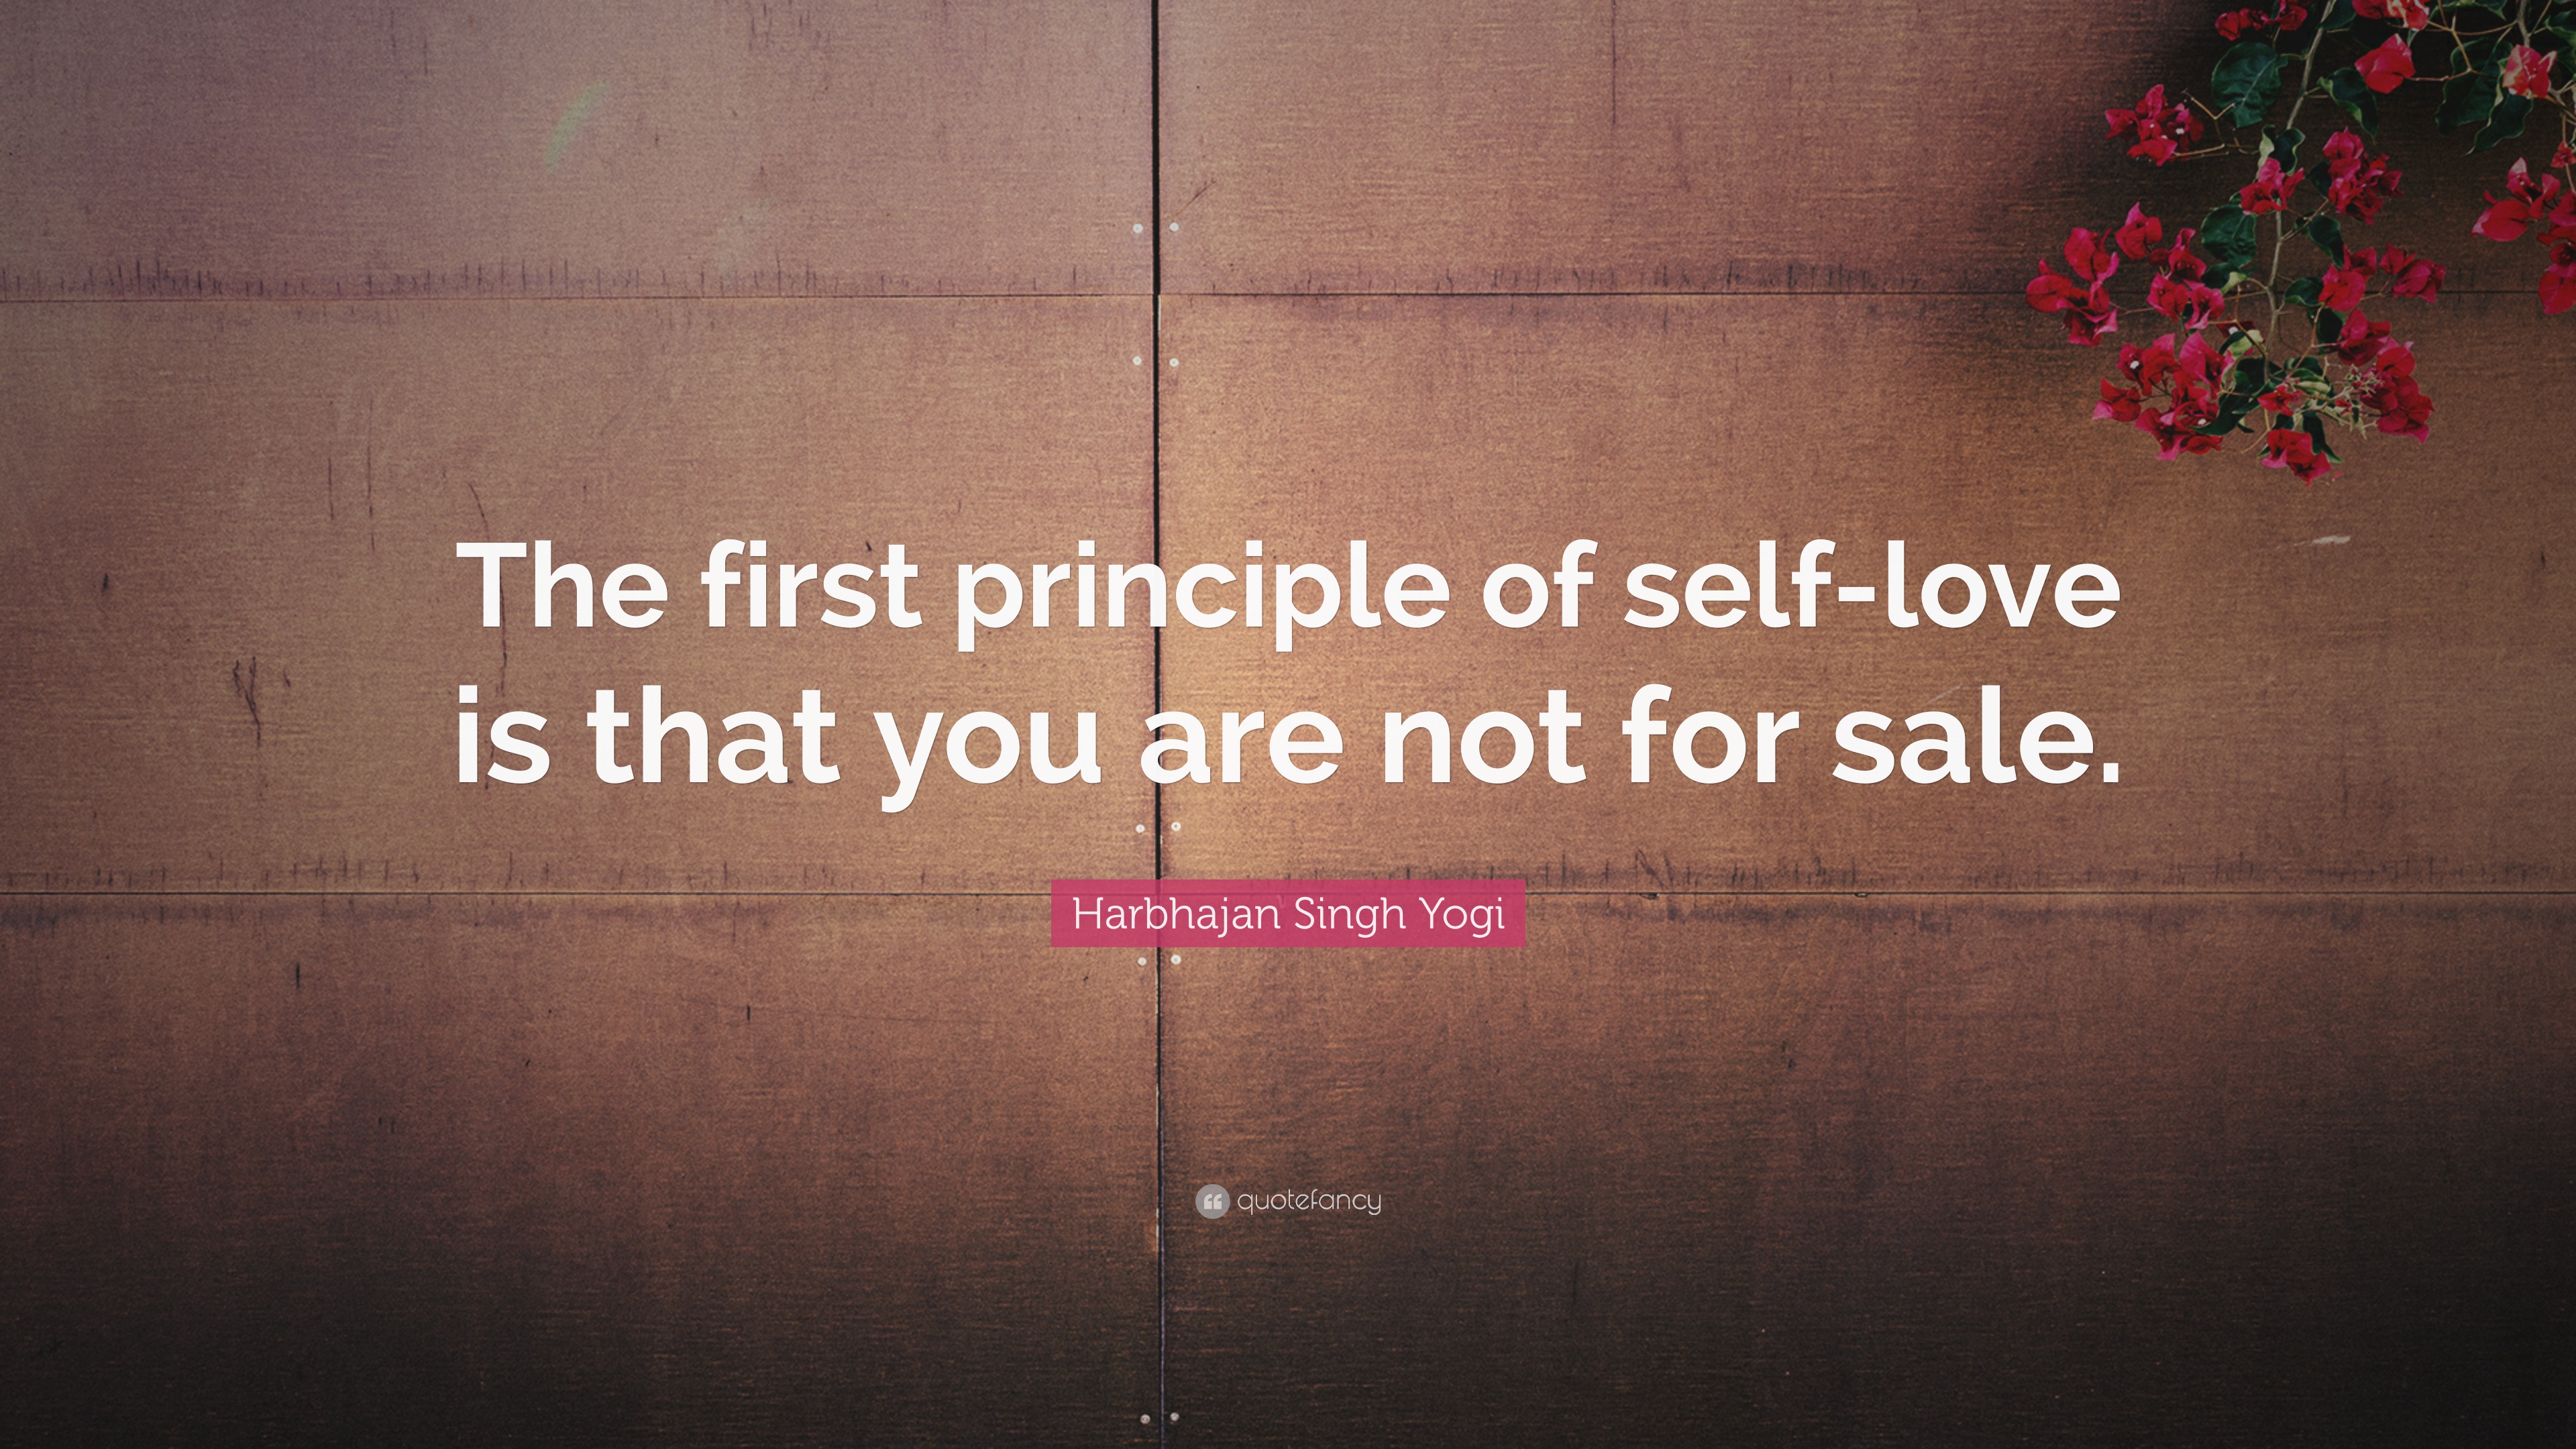 Harbhajan Singh Yogi Quote: “The first principle of self-love is that ...